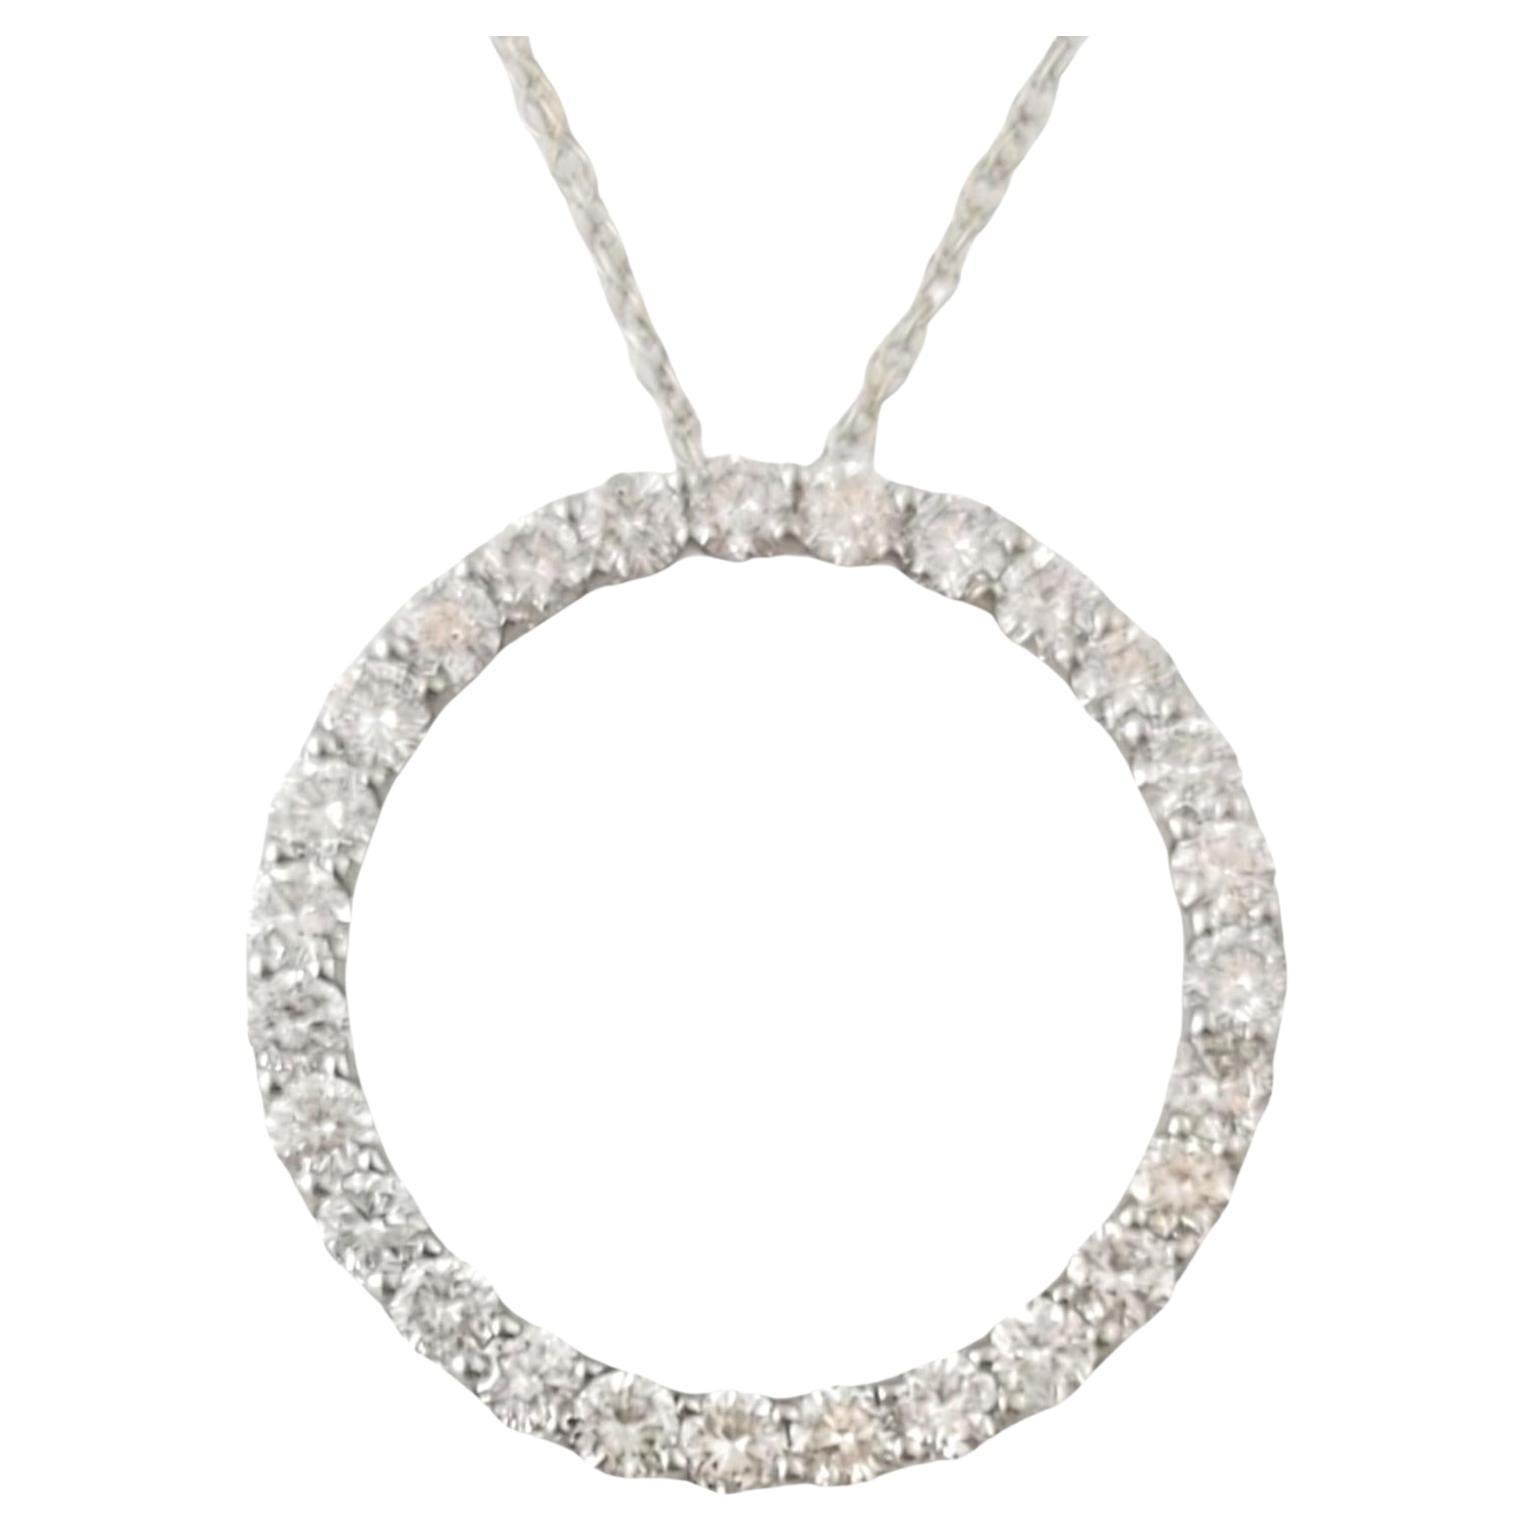 14K White Gold Diamond Circle Pendant Necklace #16298